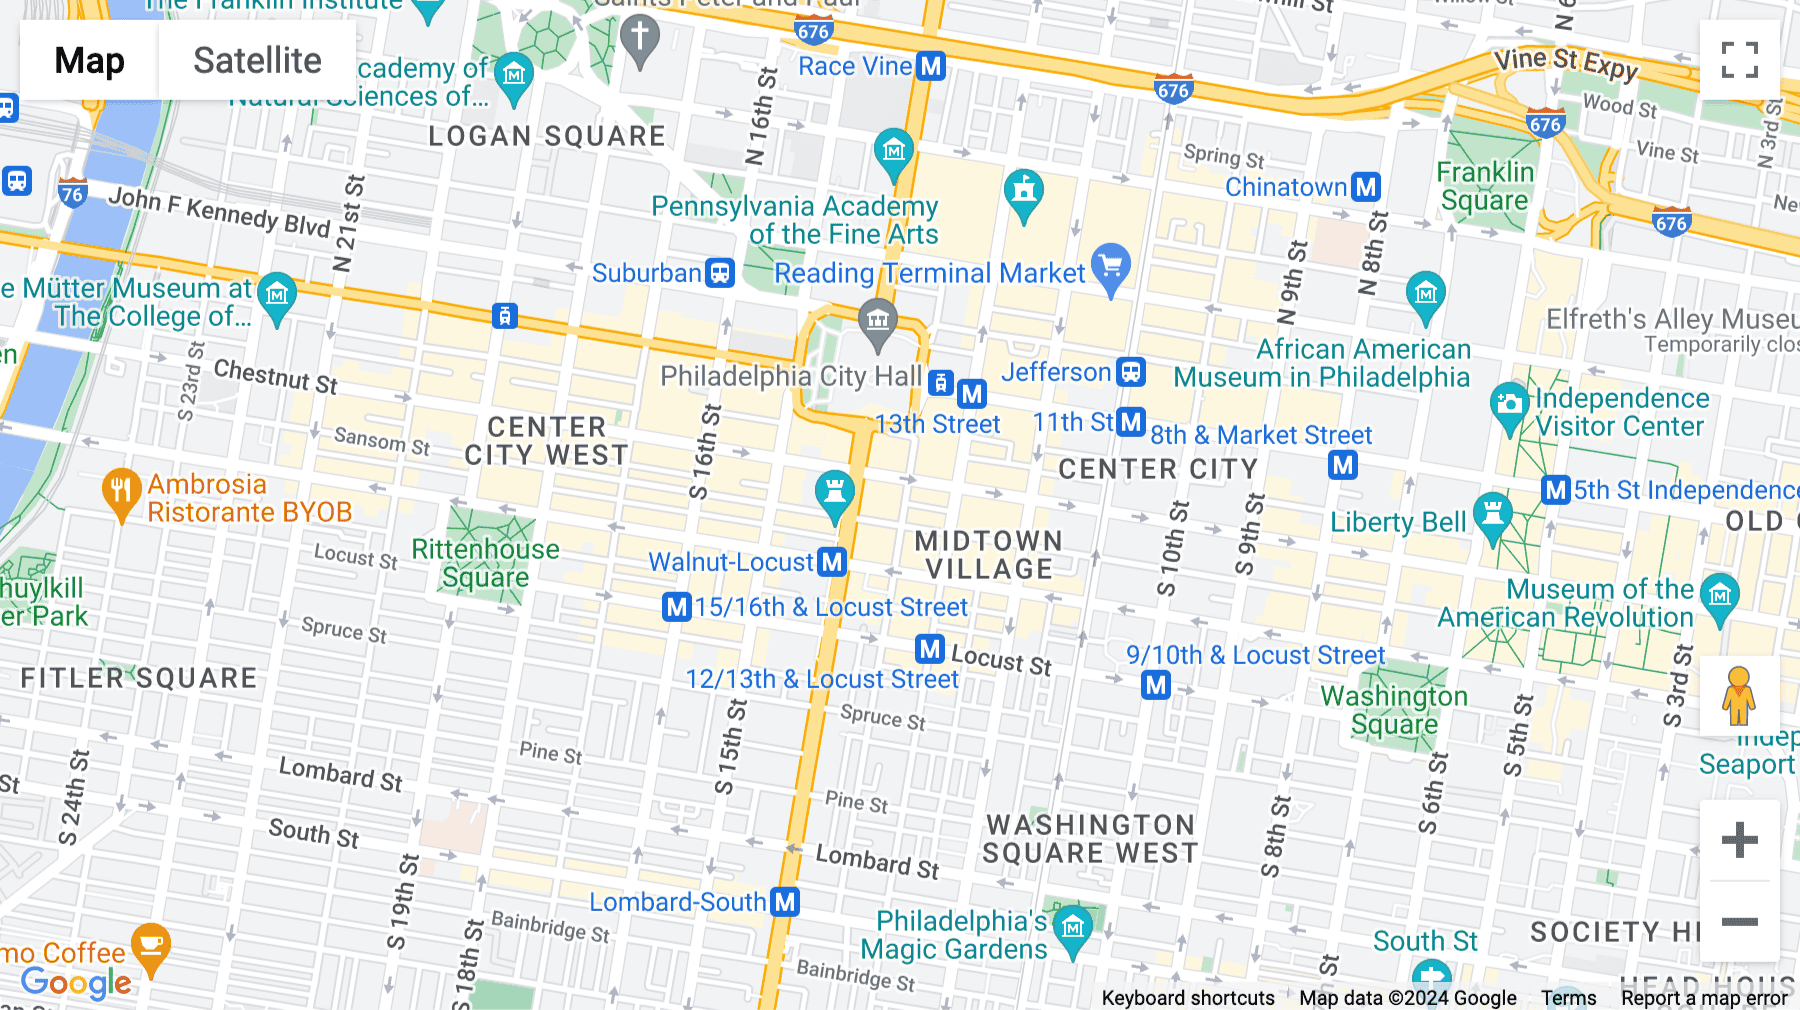 Click for interative map of Center City, 1326 Chestnut Street, 8th Floor, Philadelphia